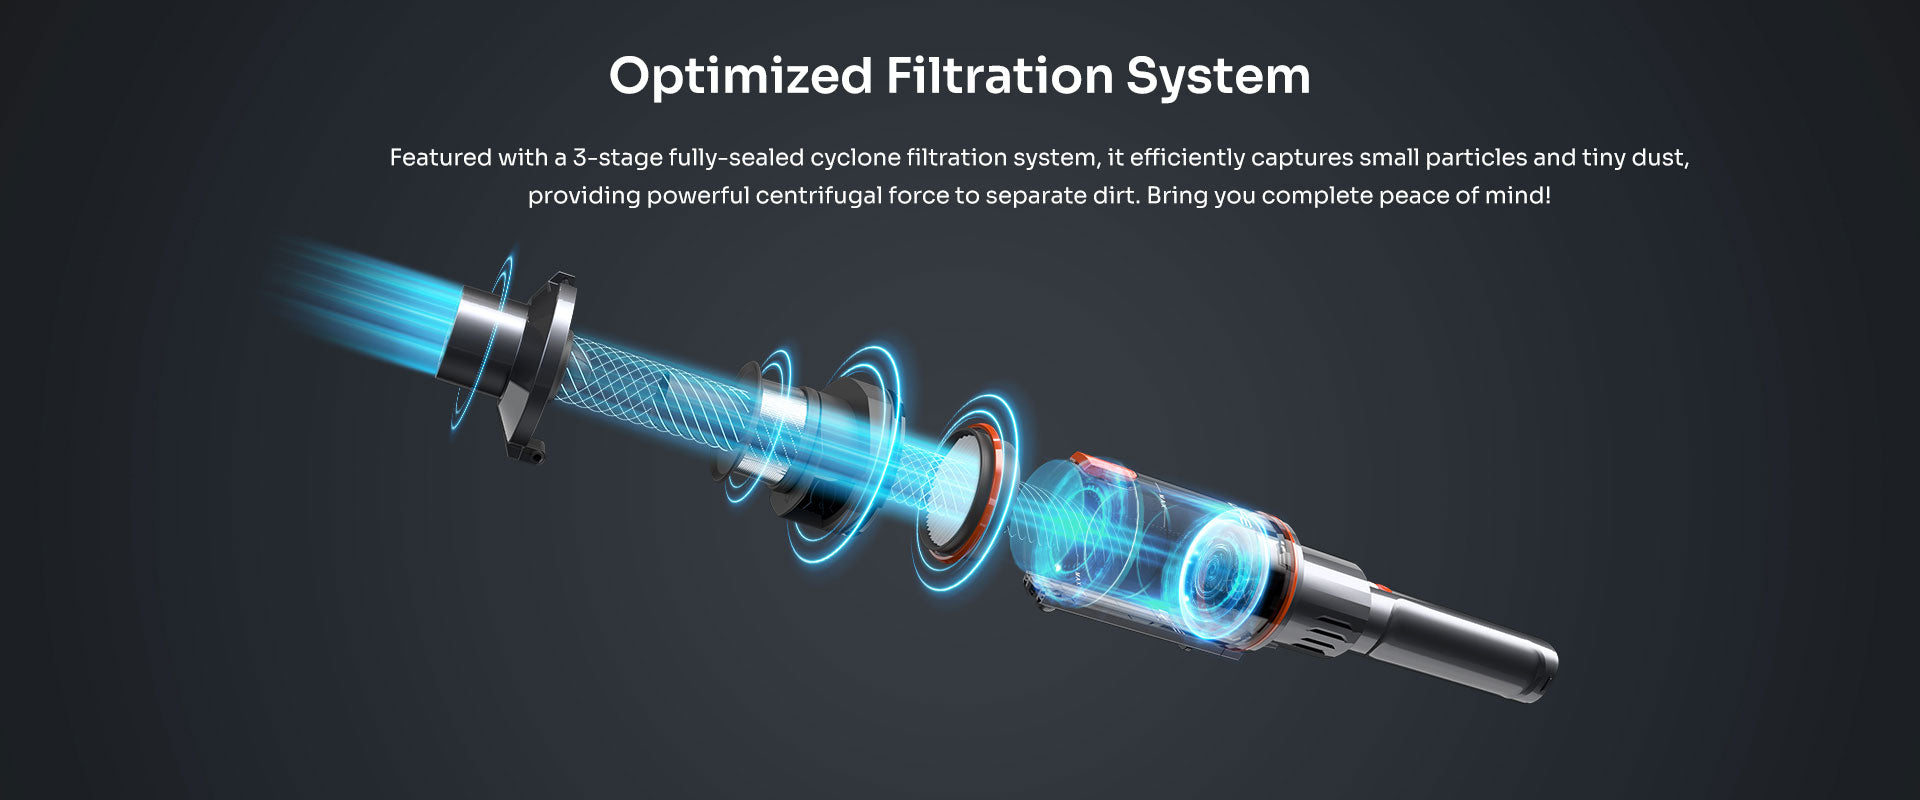 Optimized filtration system